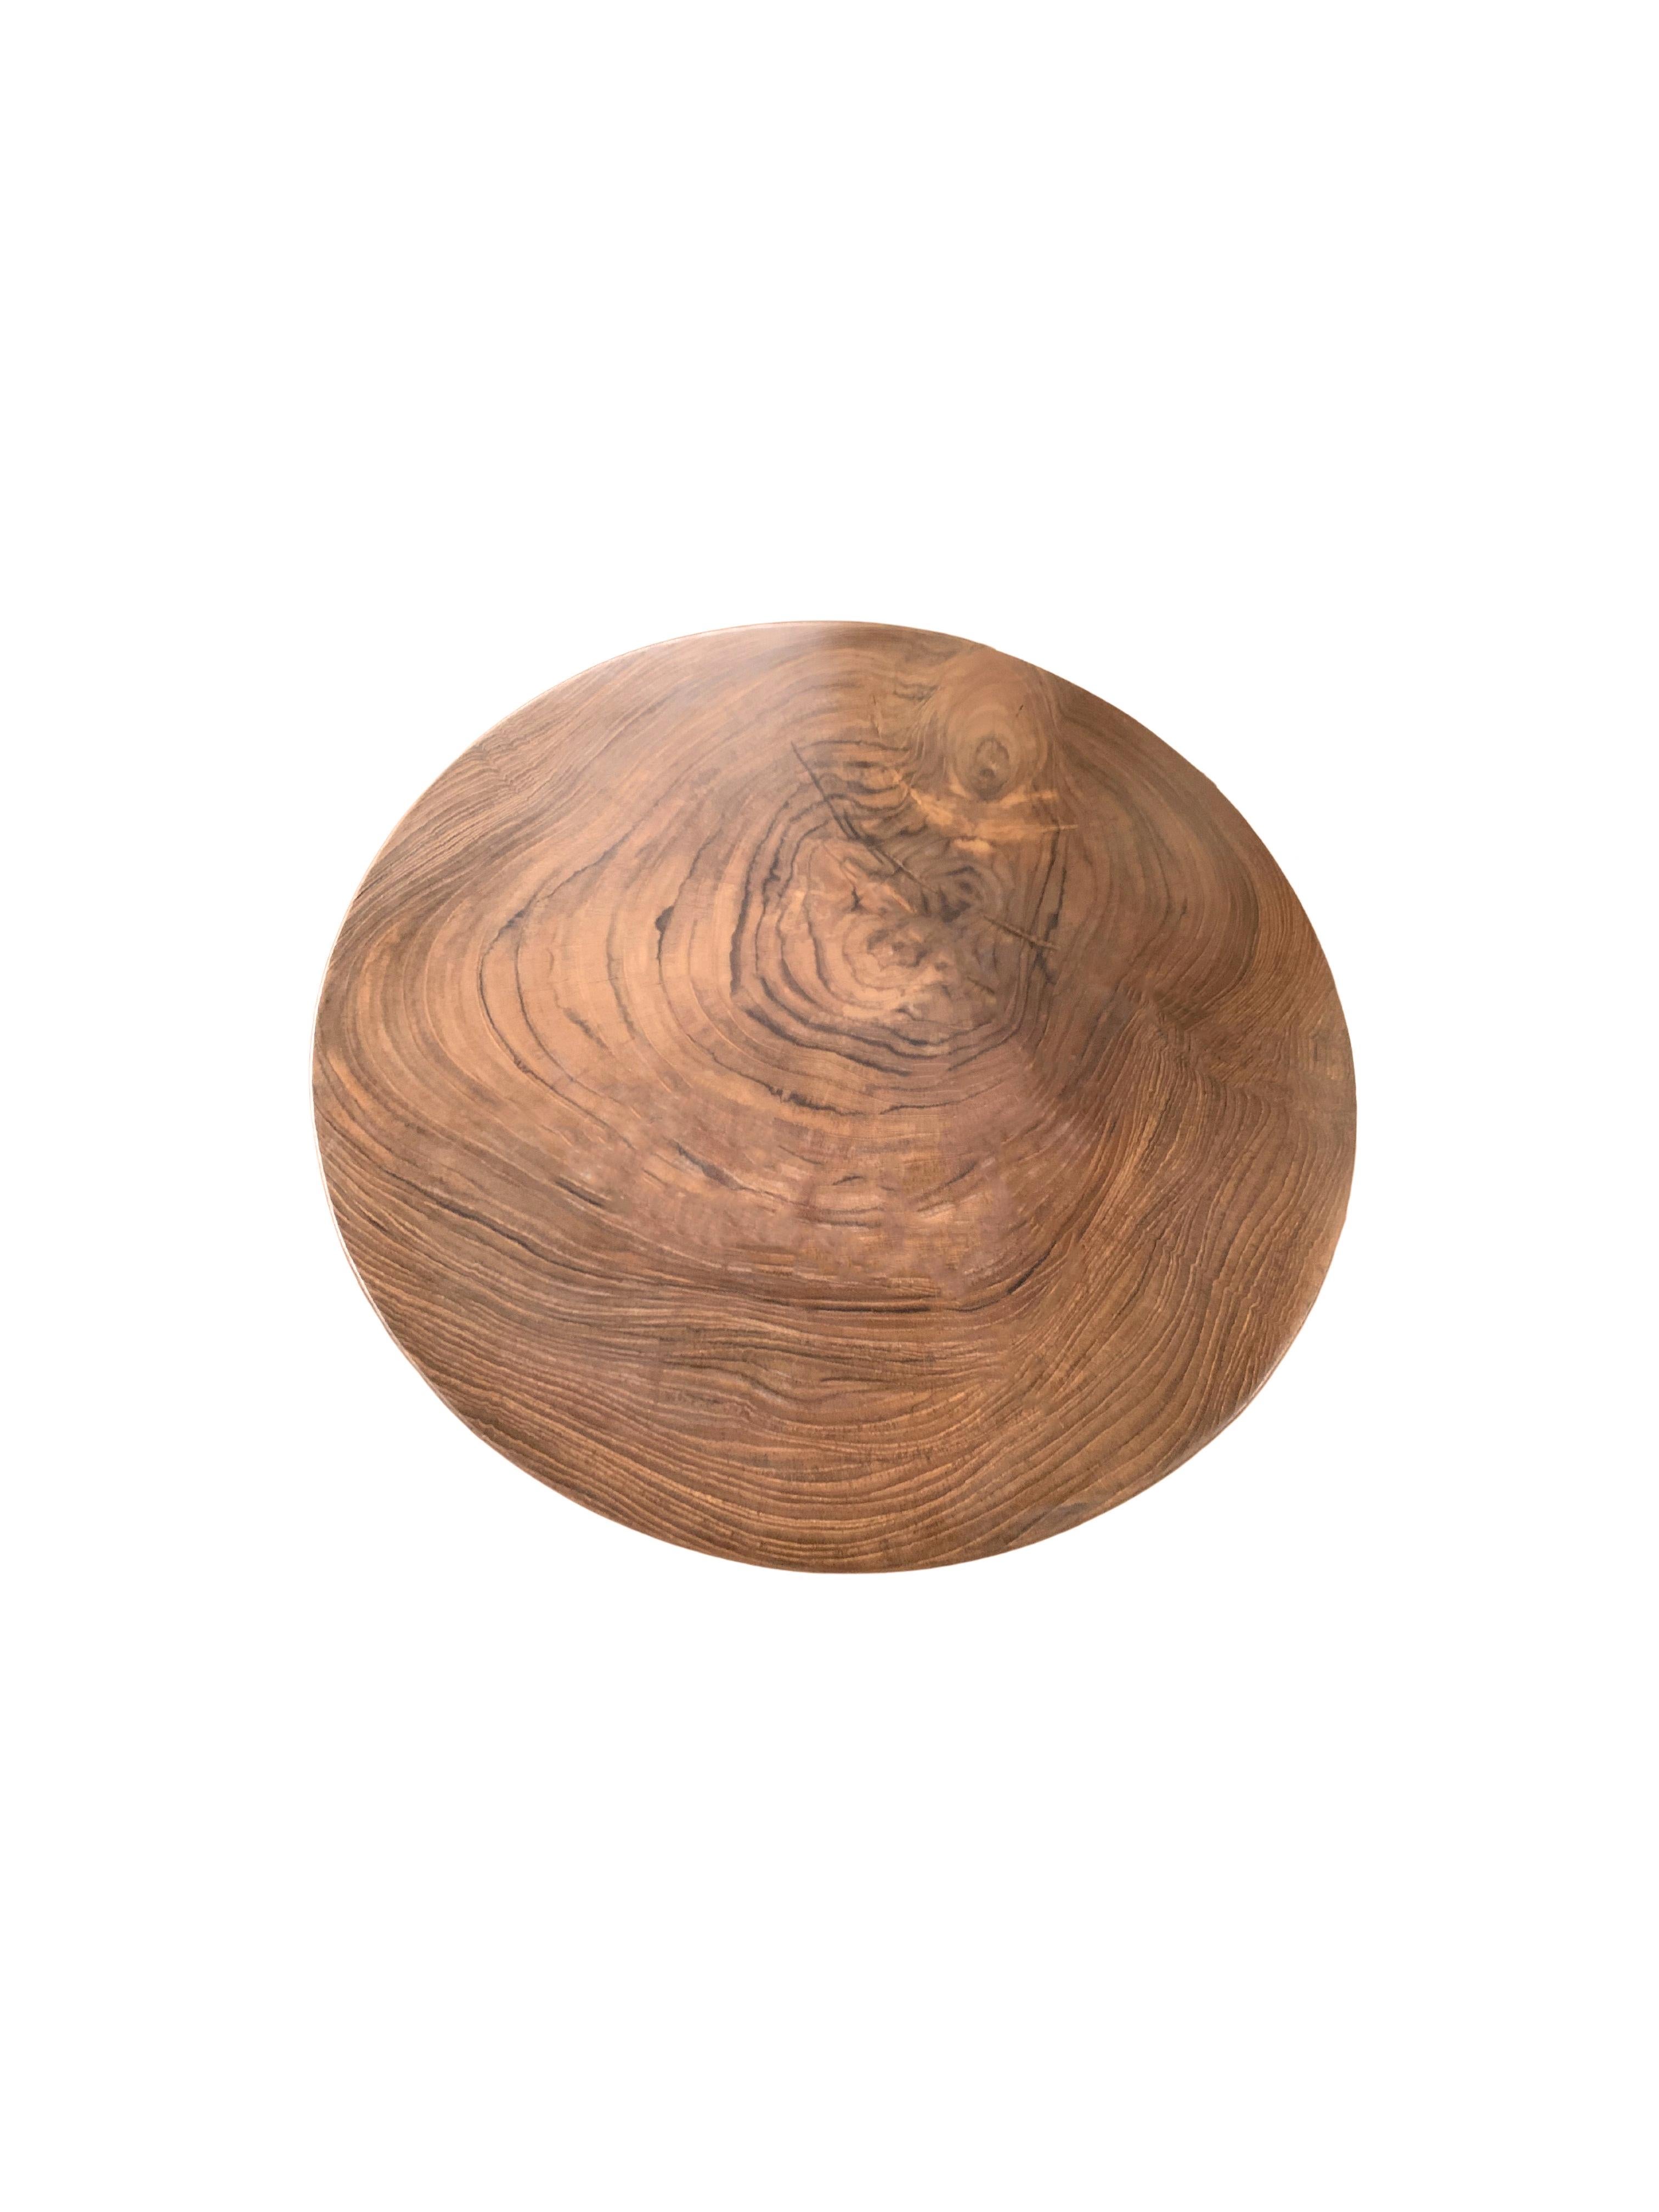 mango wood round end table